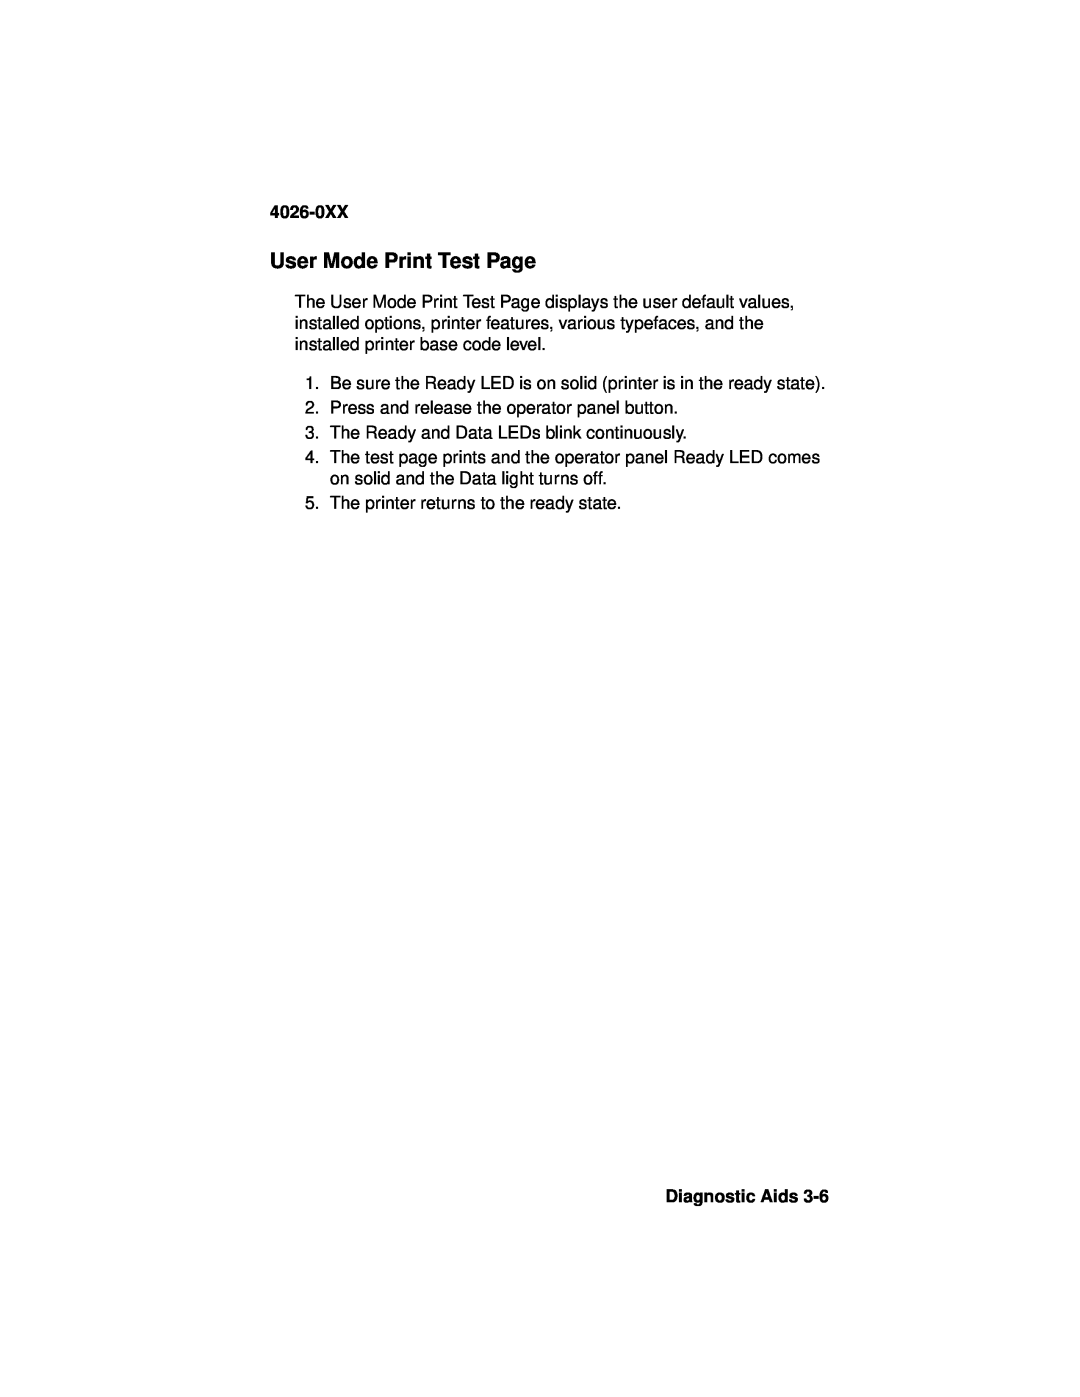 Lexmark OptraTM manual User Mode Print Test Page, 4026-0XX, Diagnostic Aids 